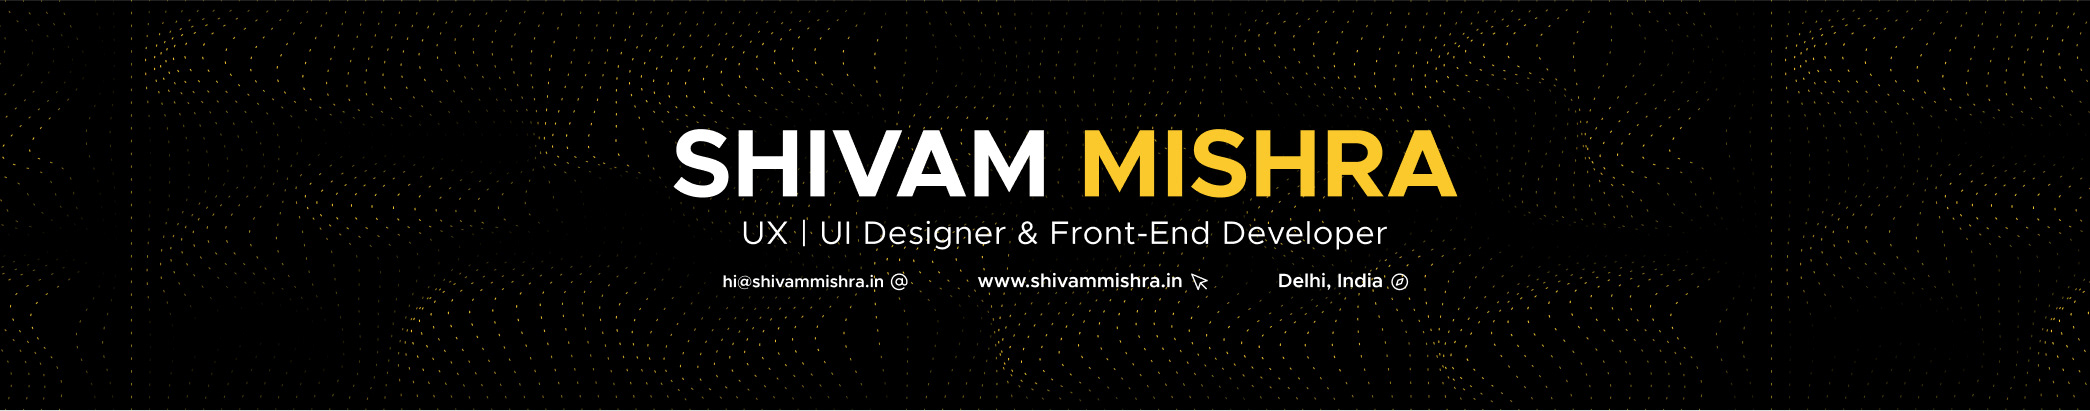 Shivam Mishra's profile banner